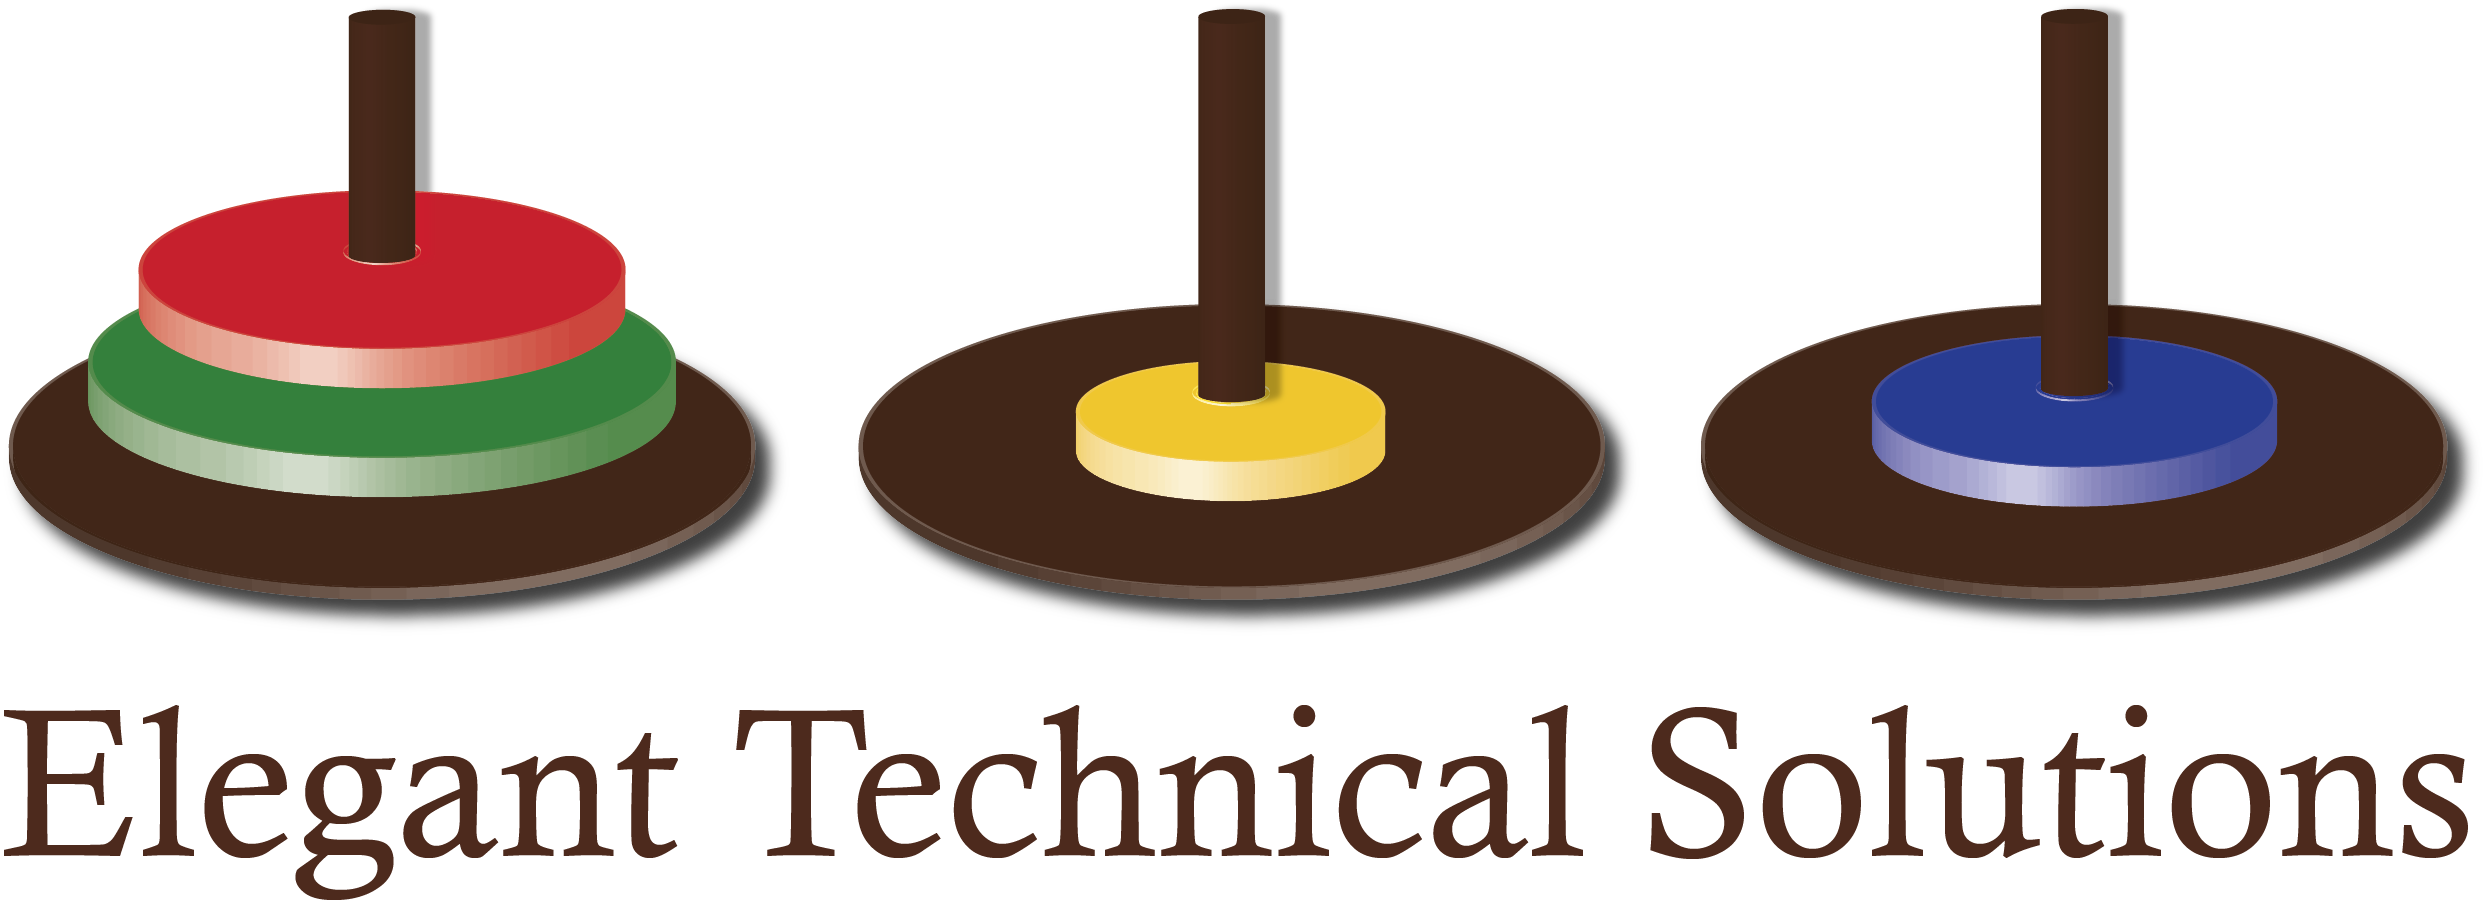 Elegant Technical Solutions